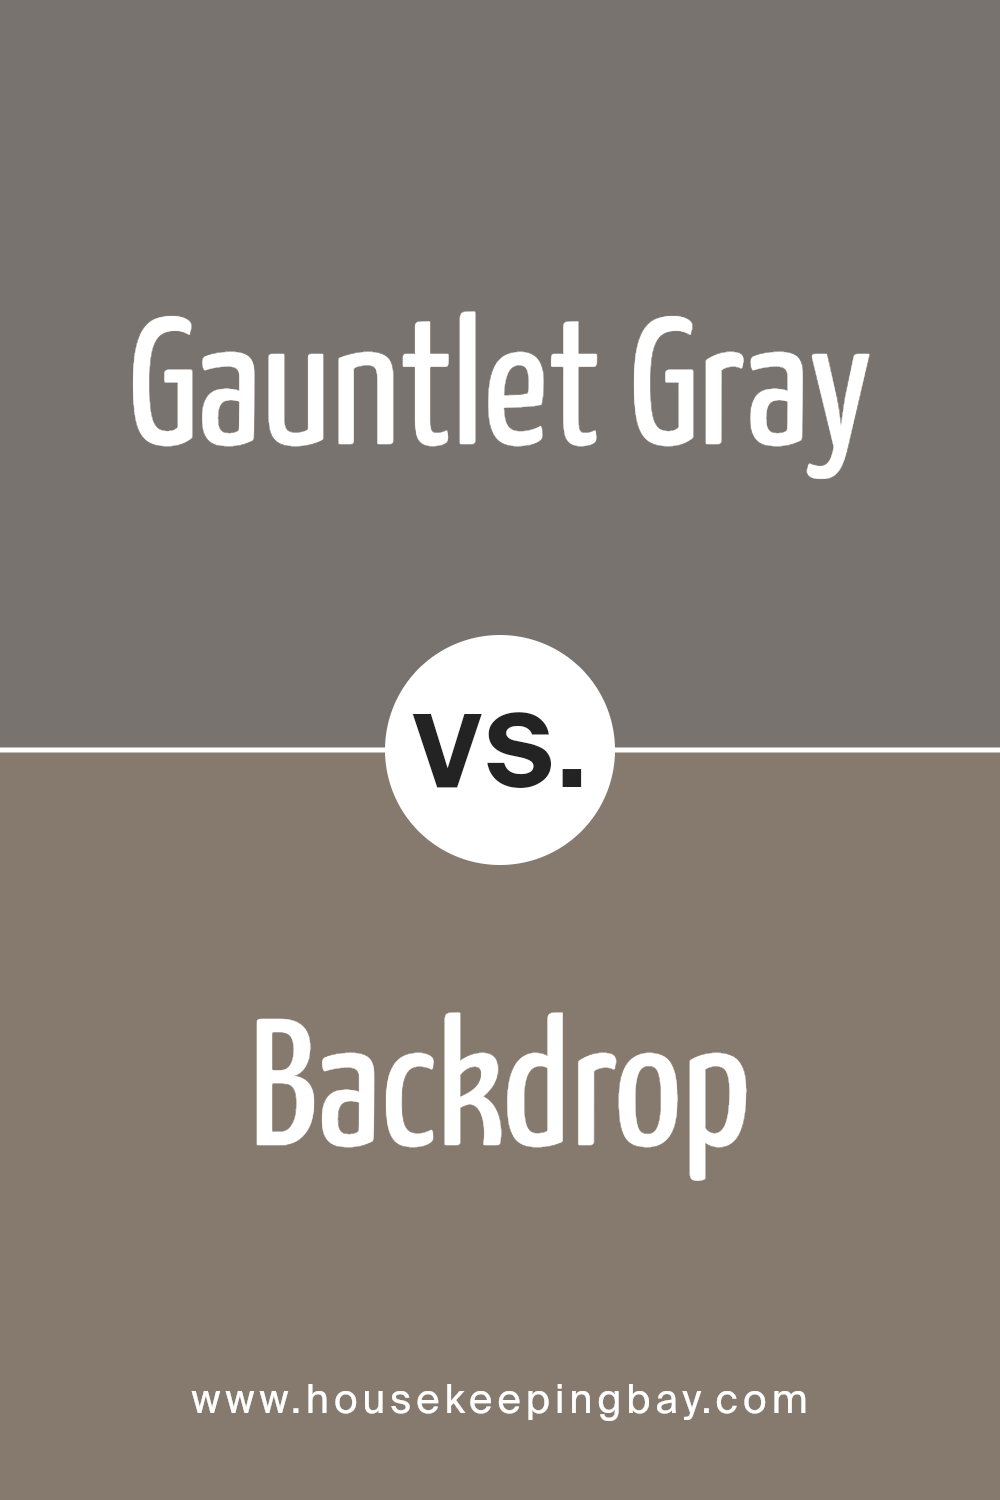 gauntlet_gray_sw_7019_vs_backdrop_sw_7025